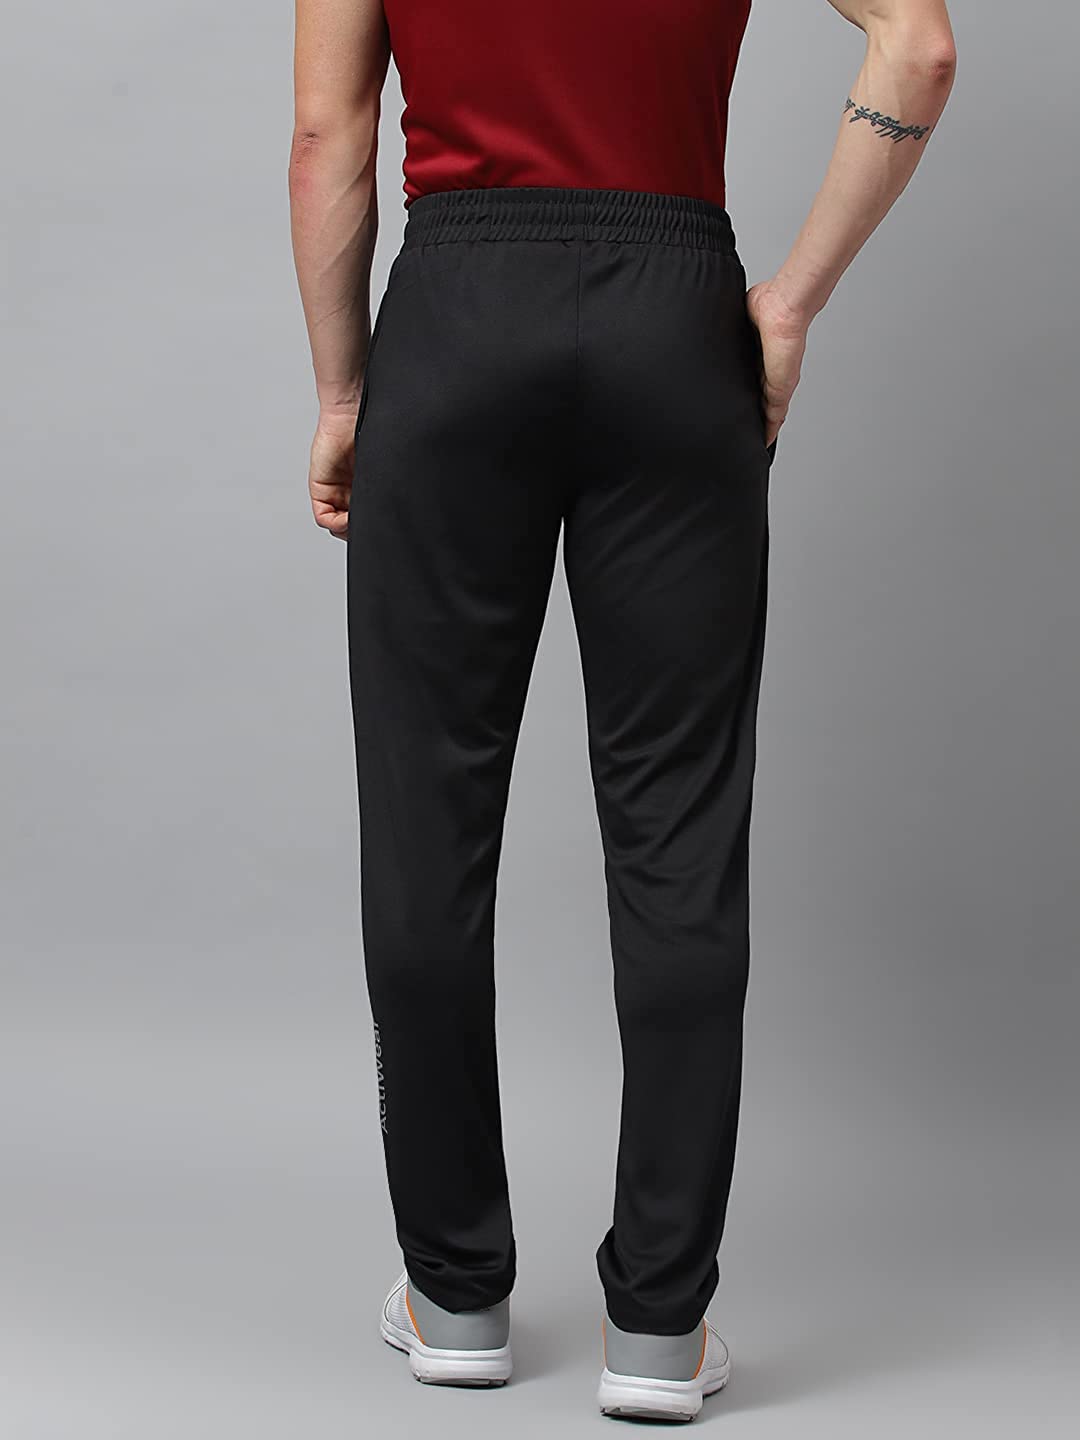 Men’s Slim Fit Polyester Track Pants (Midnight Black)